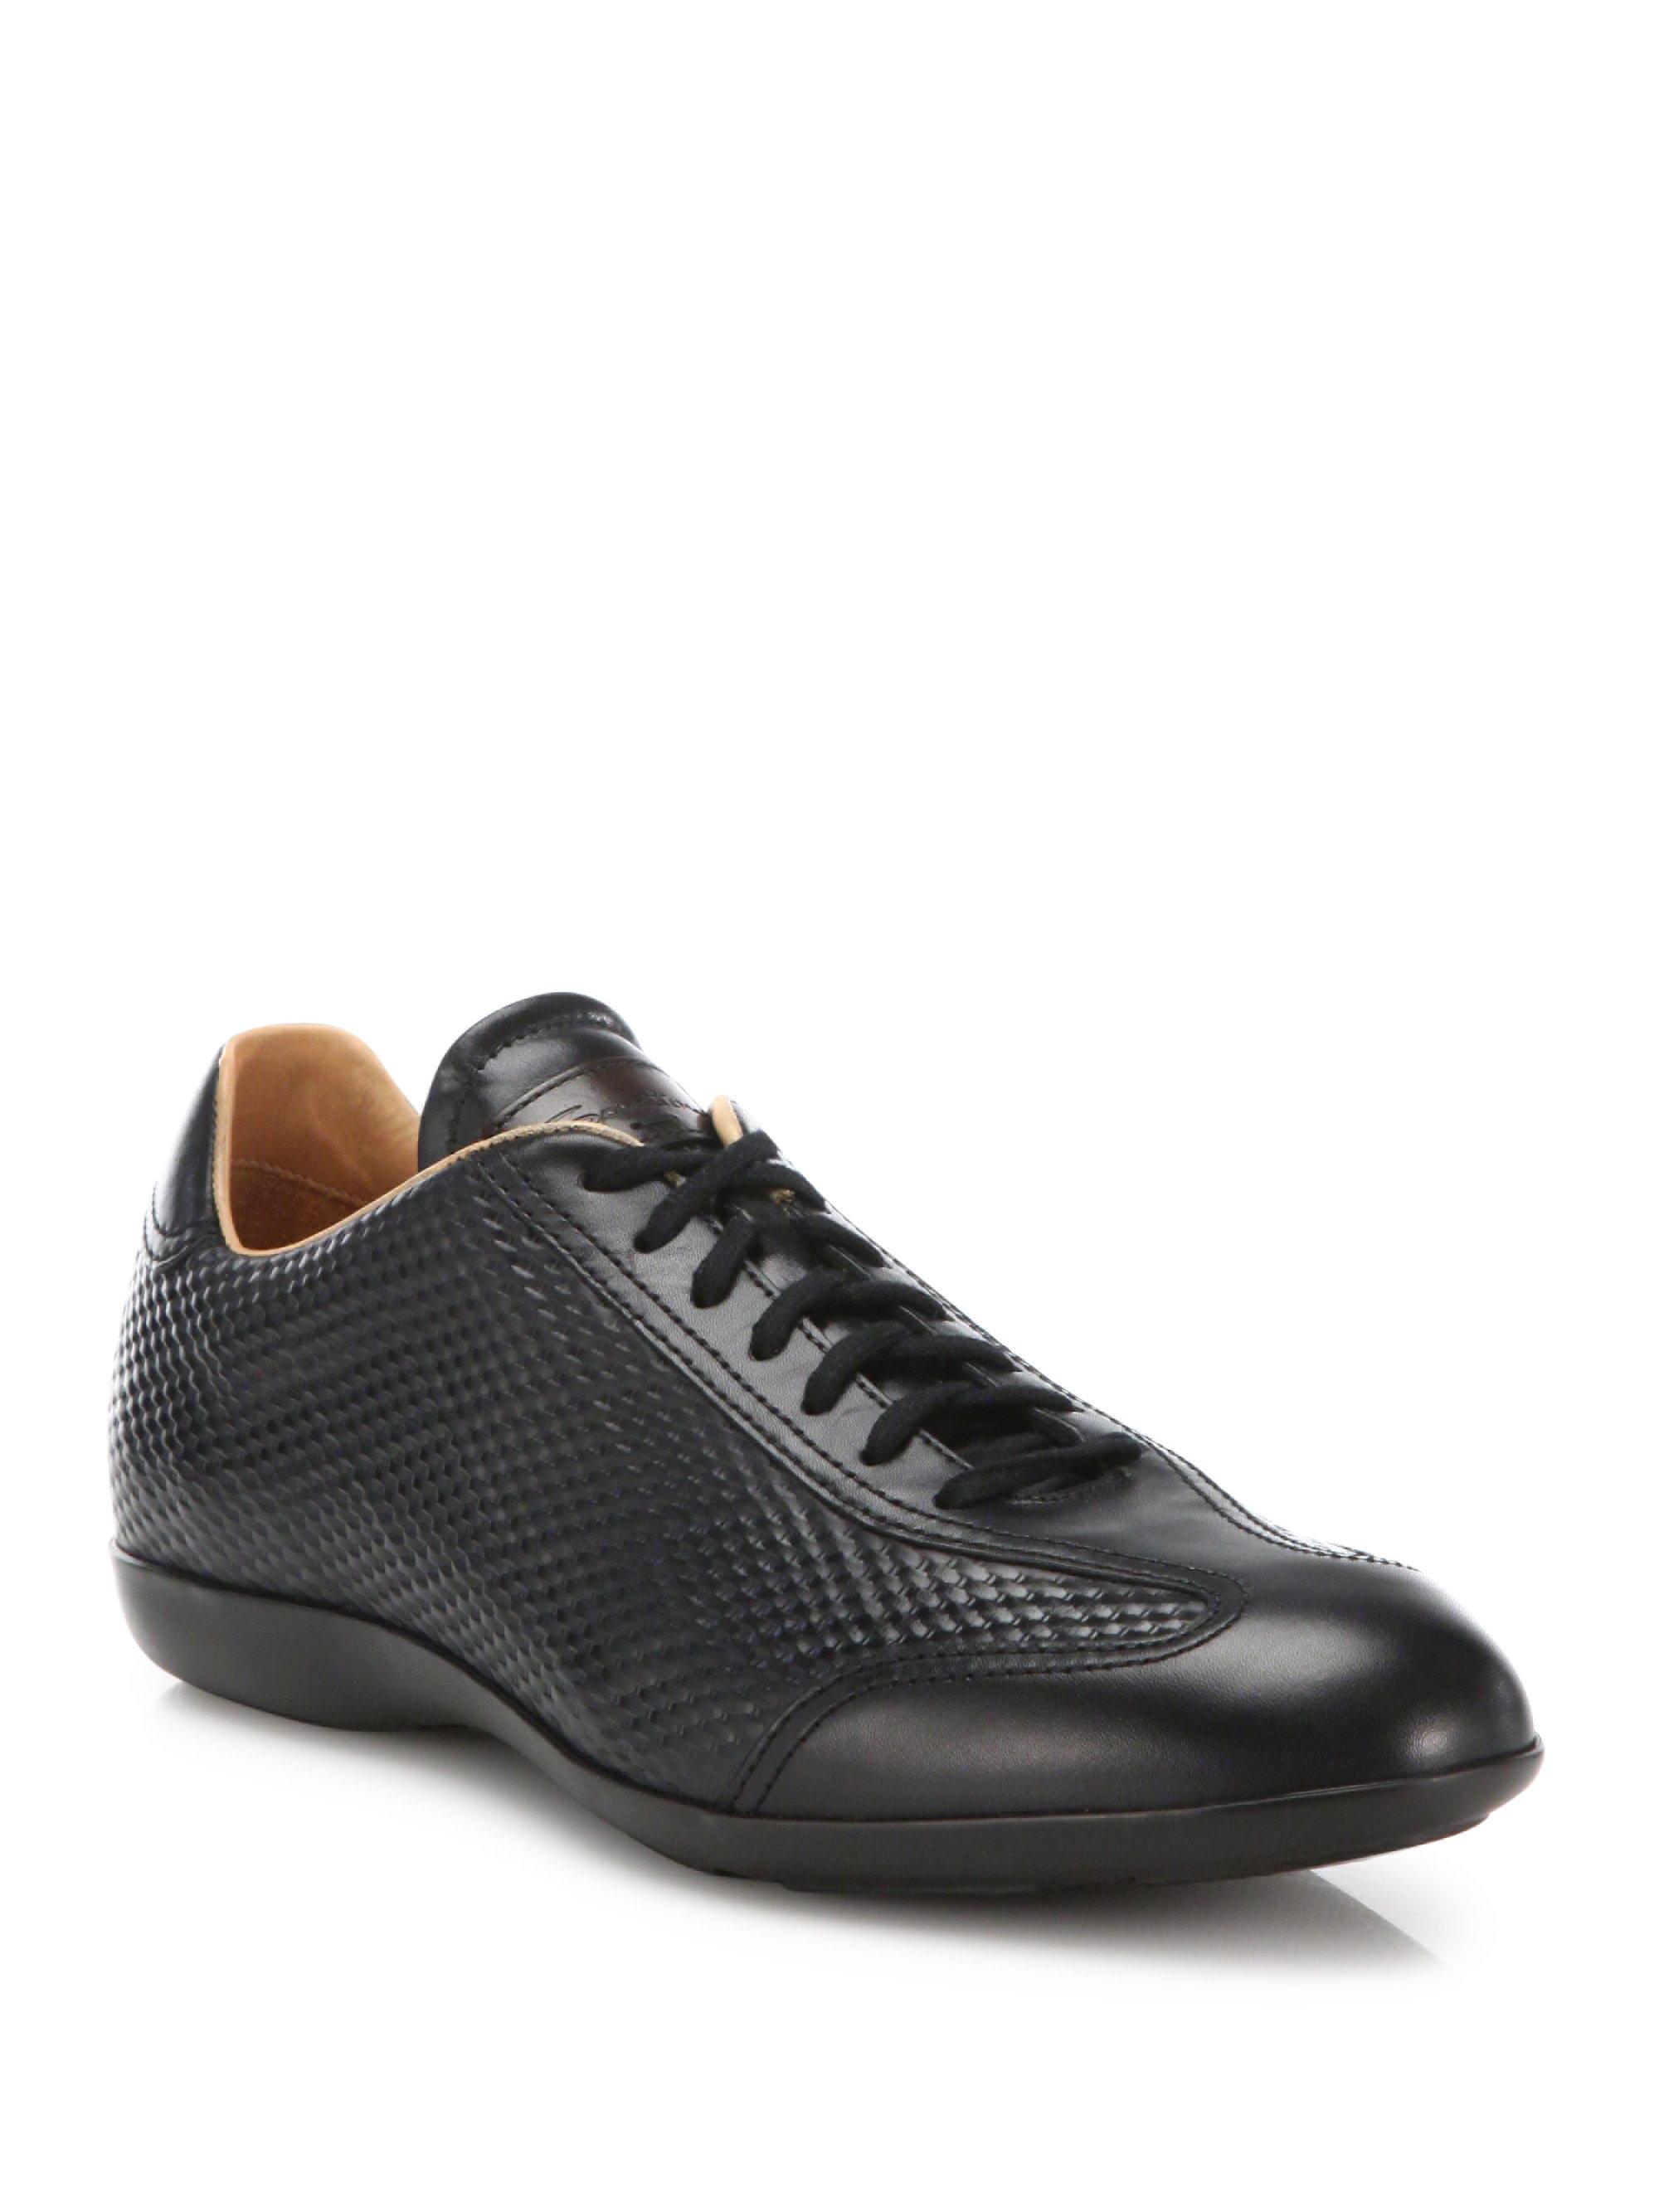 Santoni Low-top Printed Leather Sneakers in Black for Men - Lyst